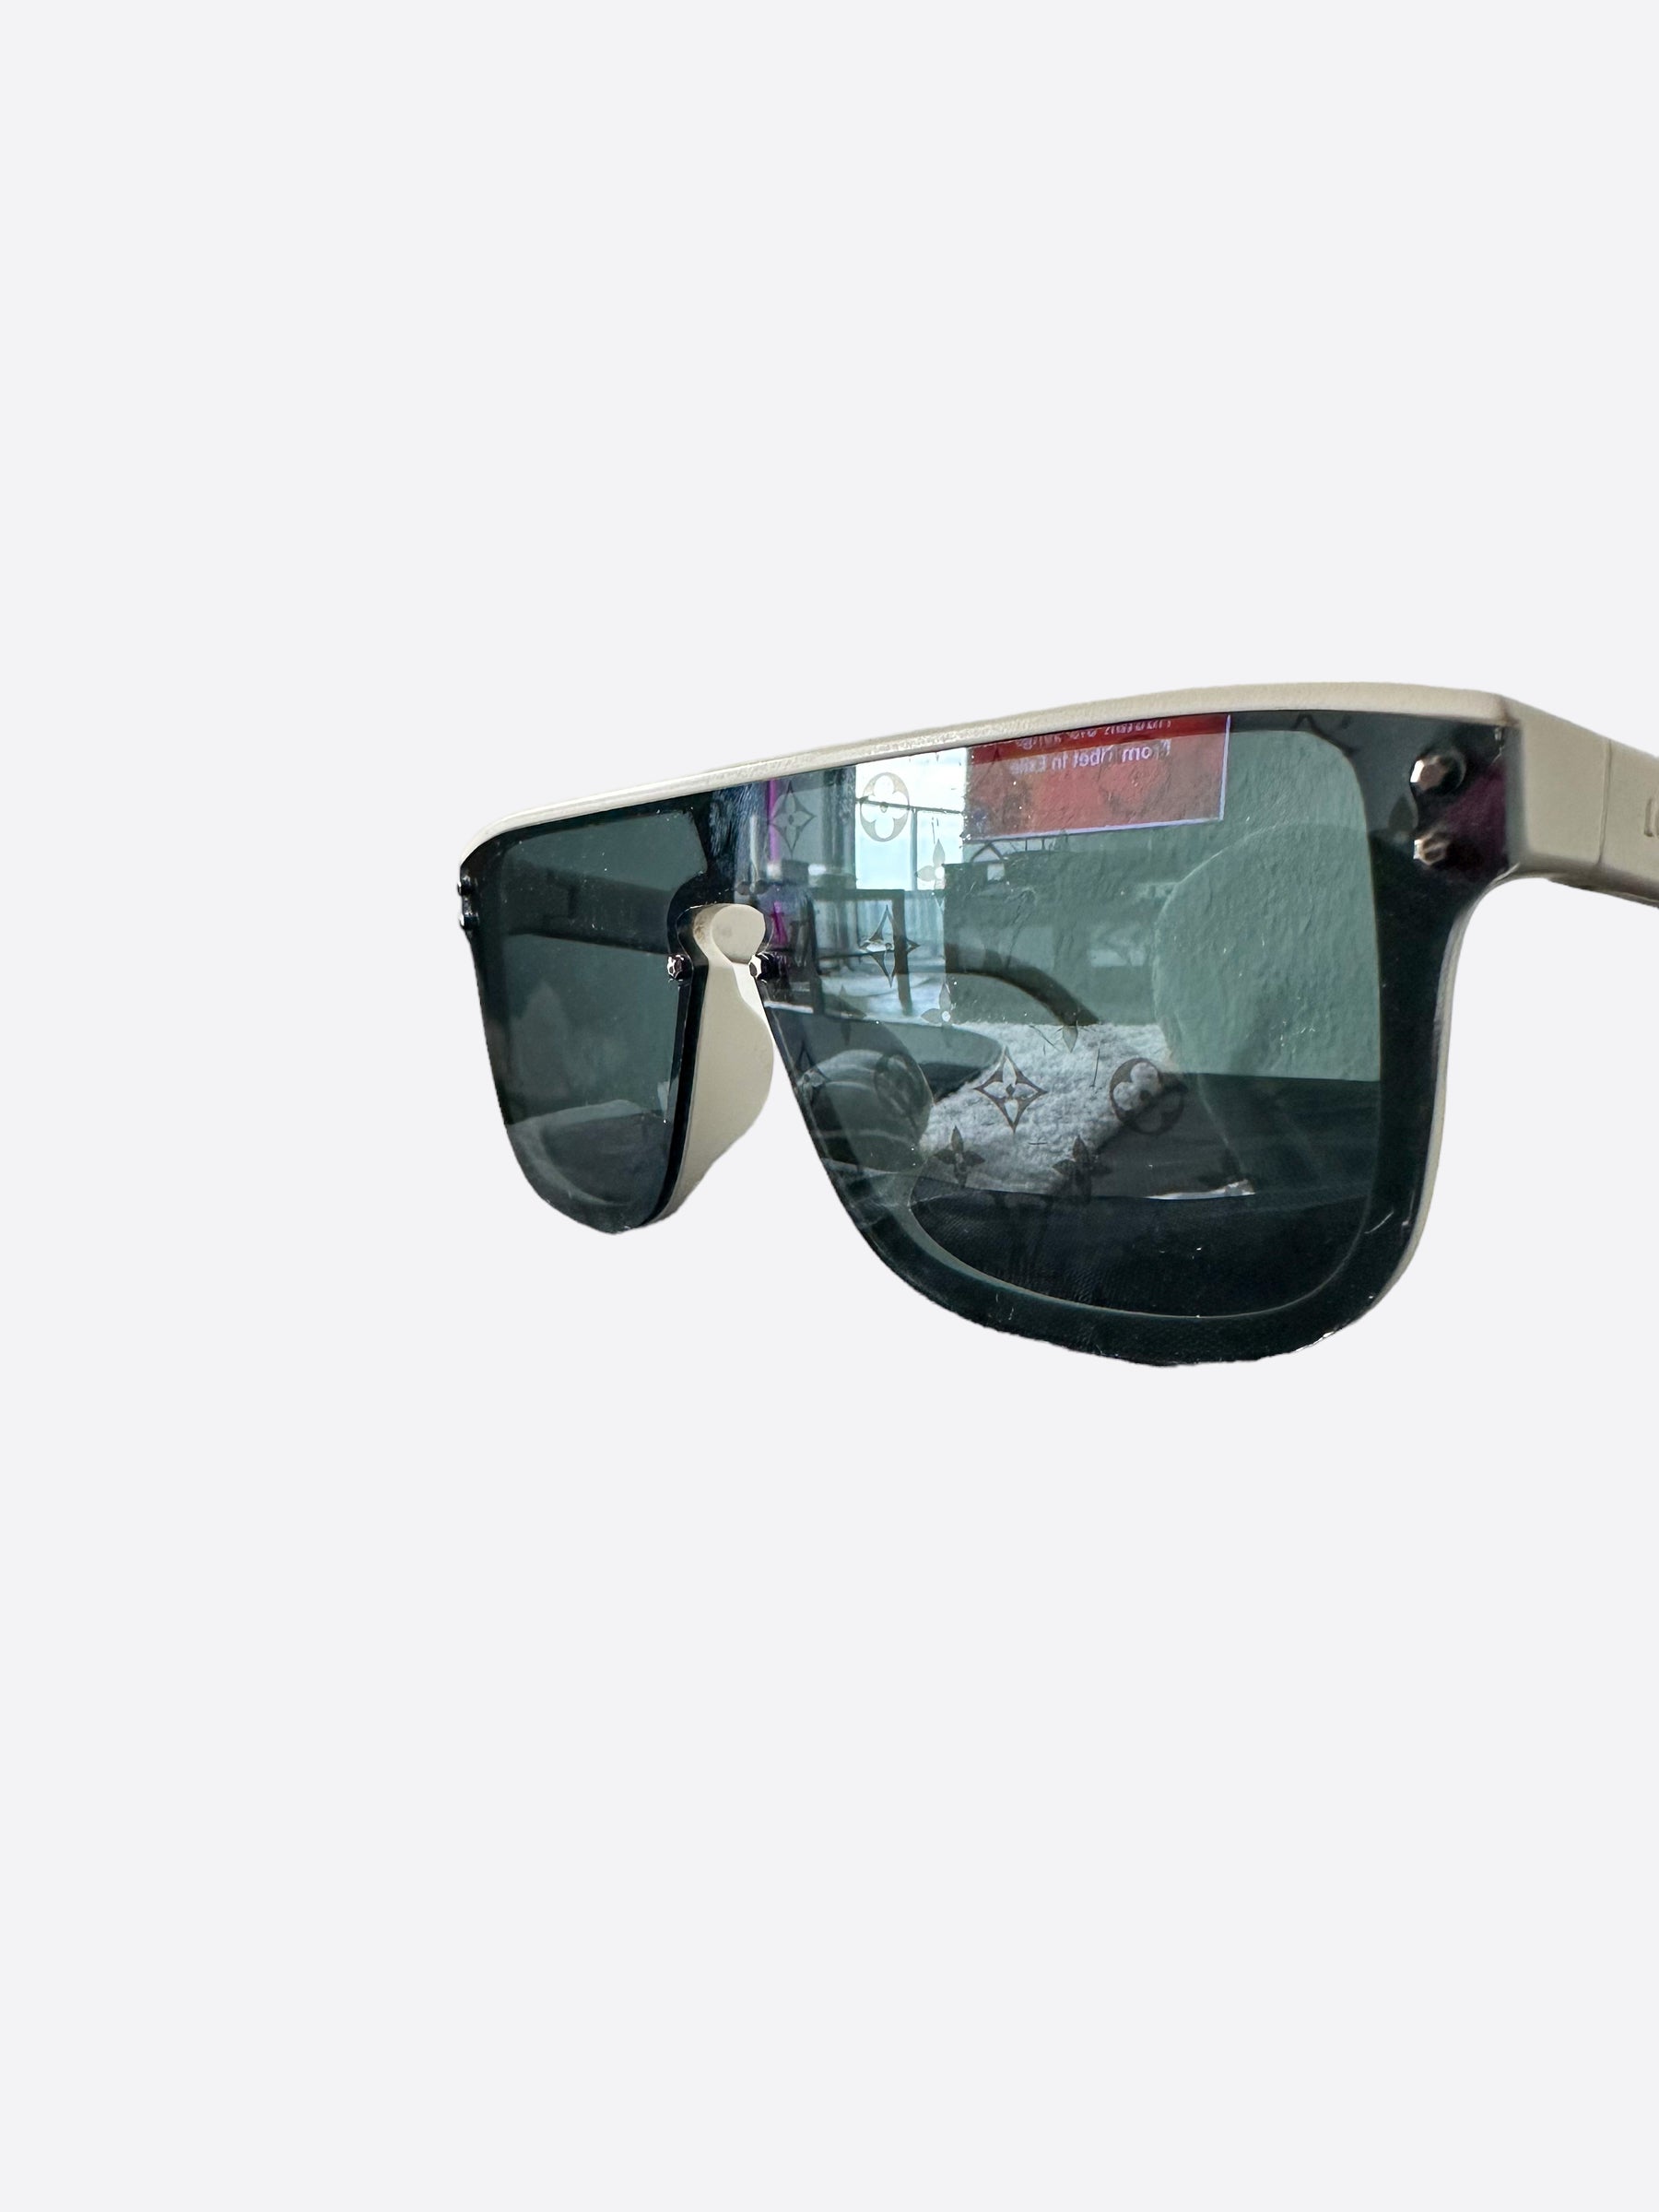 louis vuitton sunglasses real vs fake